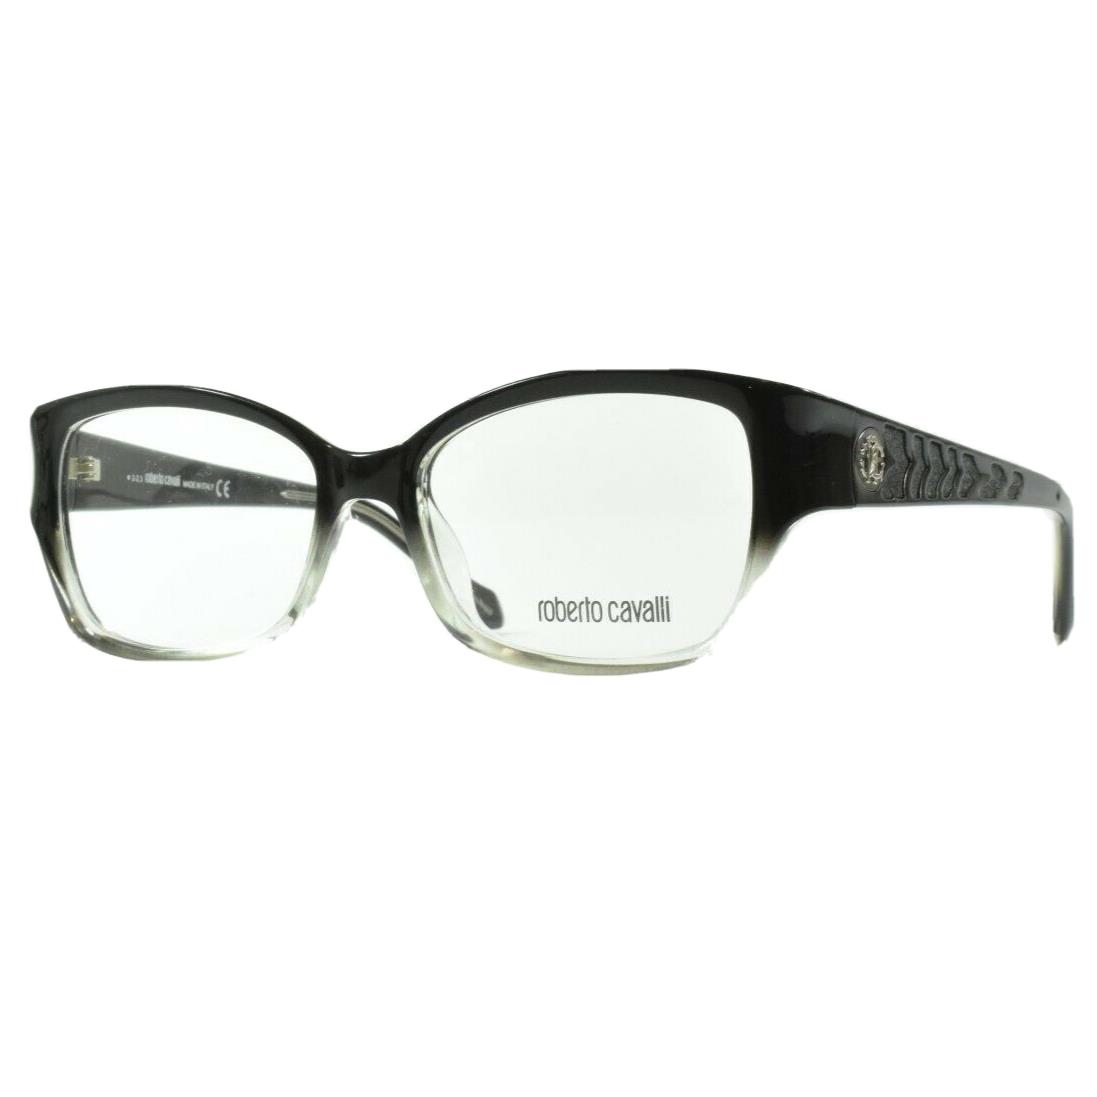 Roberto Cavalli Moyenne 772U/V 003 Full Rim Black Optical Glasses - Frame: Black